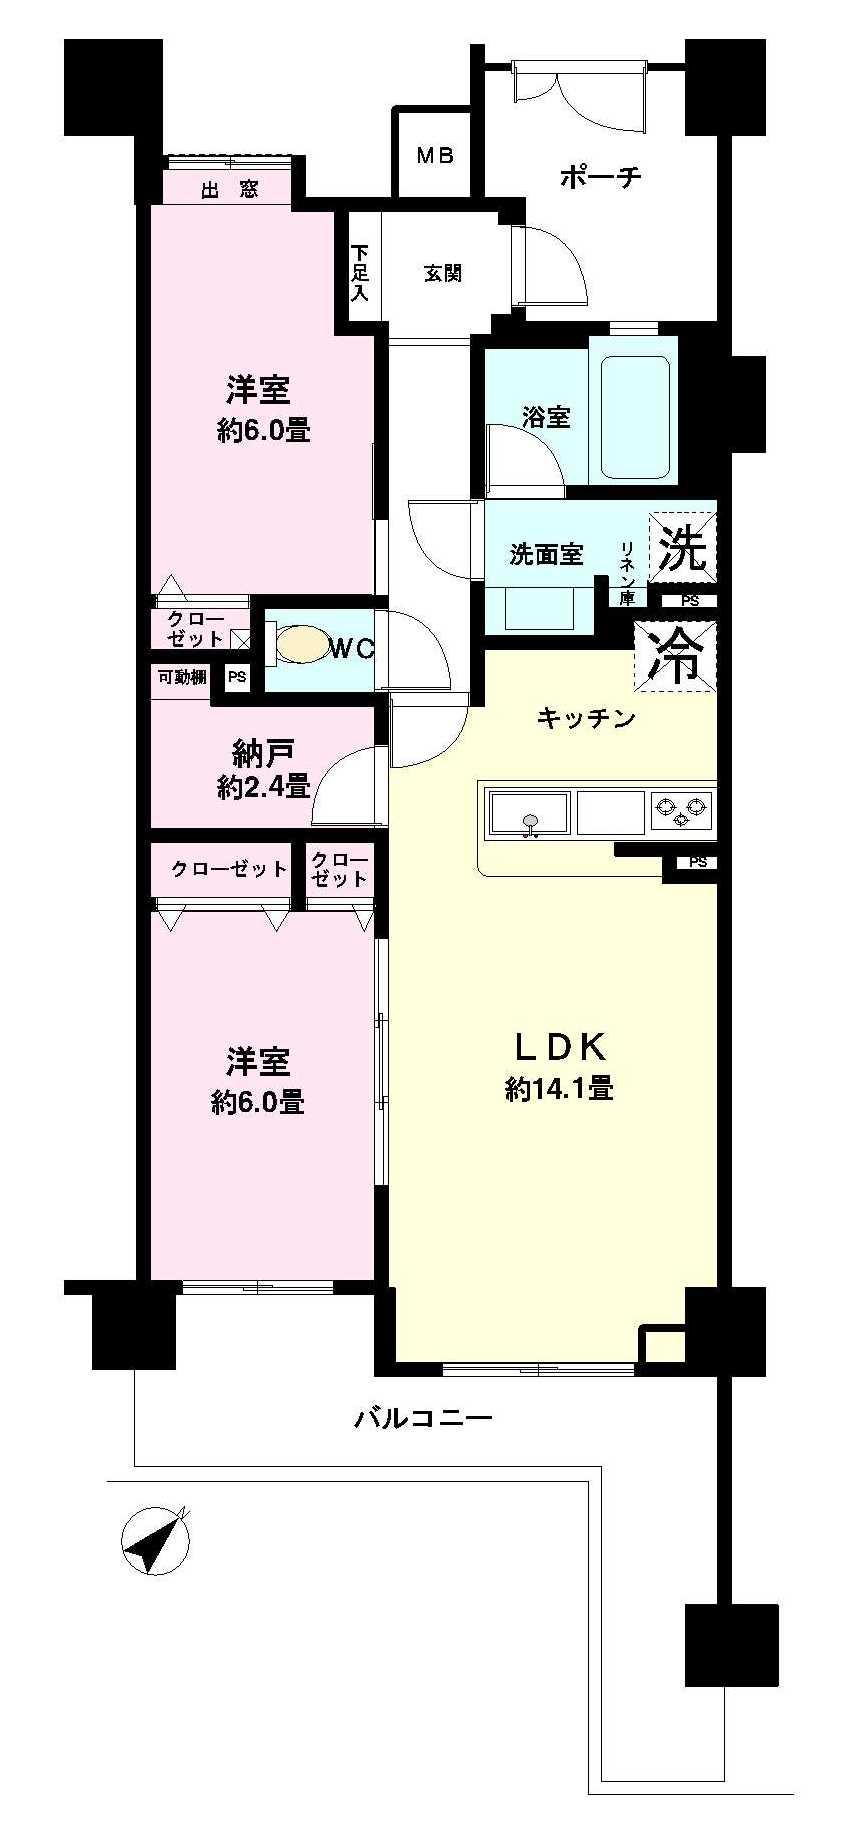 Floor plan. 2LDK + S (storeroom), Price 19,800,000 yen, Occupied area 63.07 sq m , Balcony area 12.7 sq m